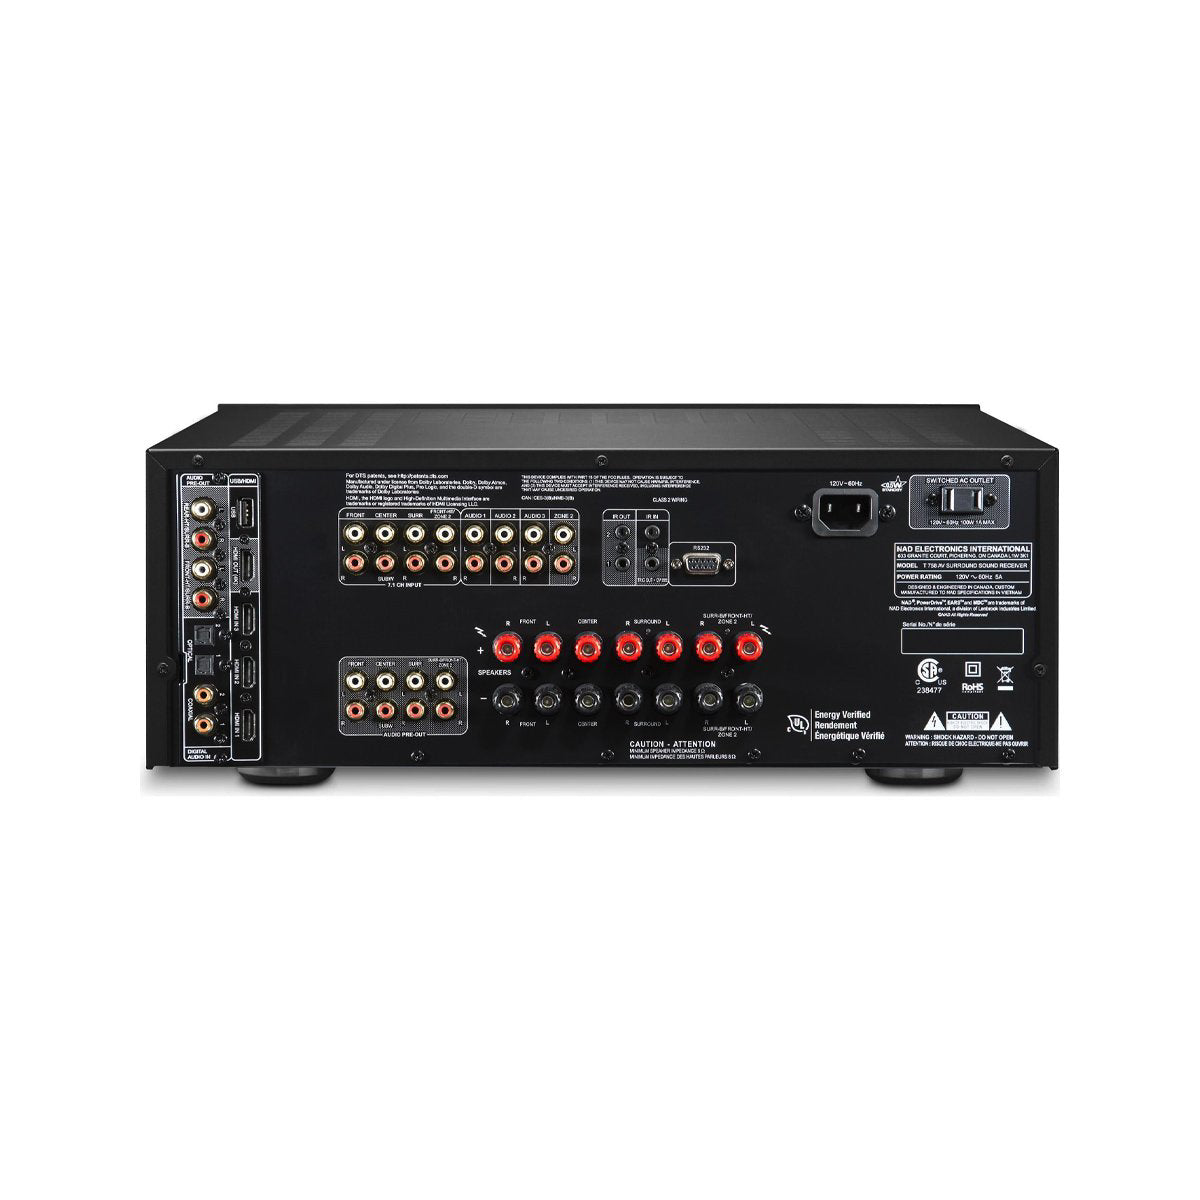 NAD T758v3i AV Receiver - The Audio Experts